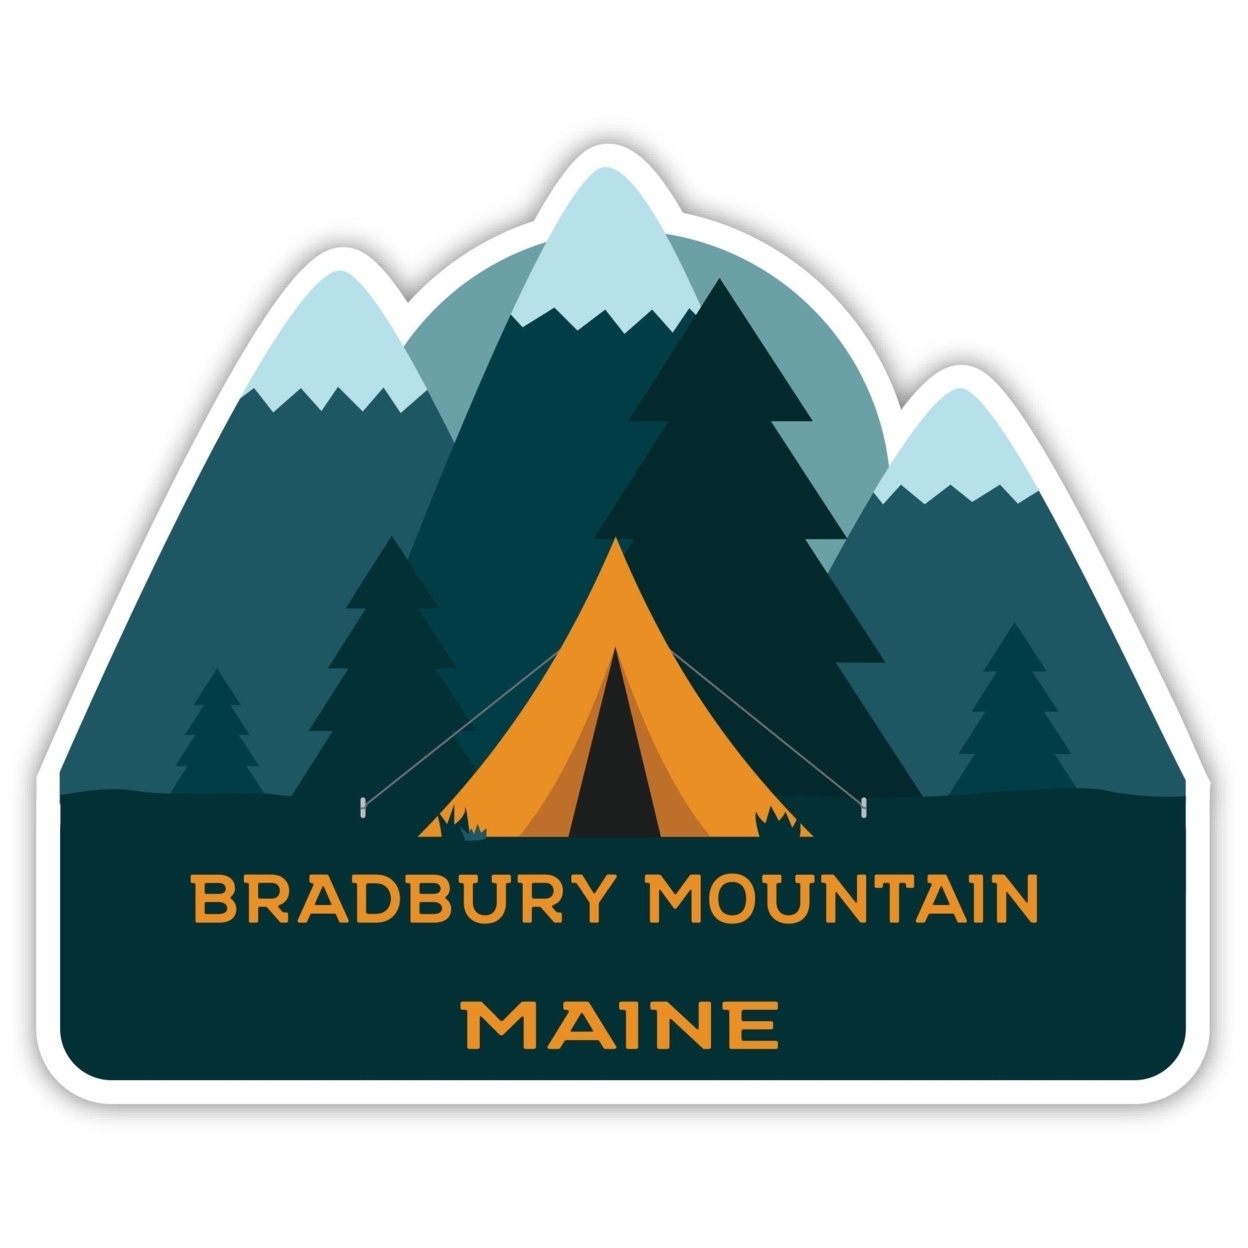 Bradbury Mountain Maine Souvenir Decorative Stickers (Choose Theme And Size) - 4-Pack, 10-Inch, Tent